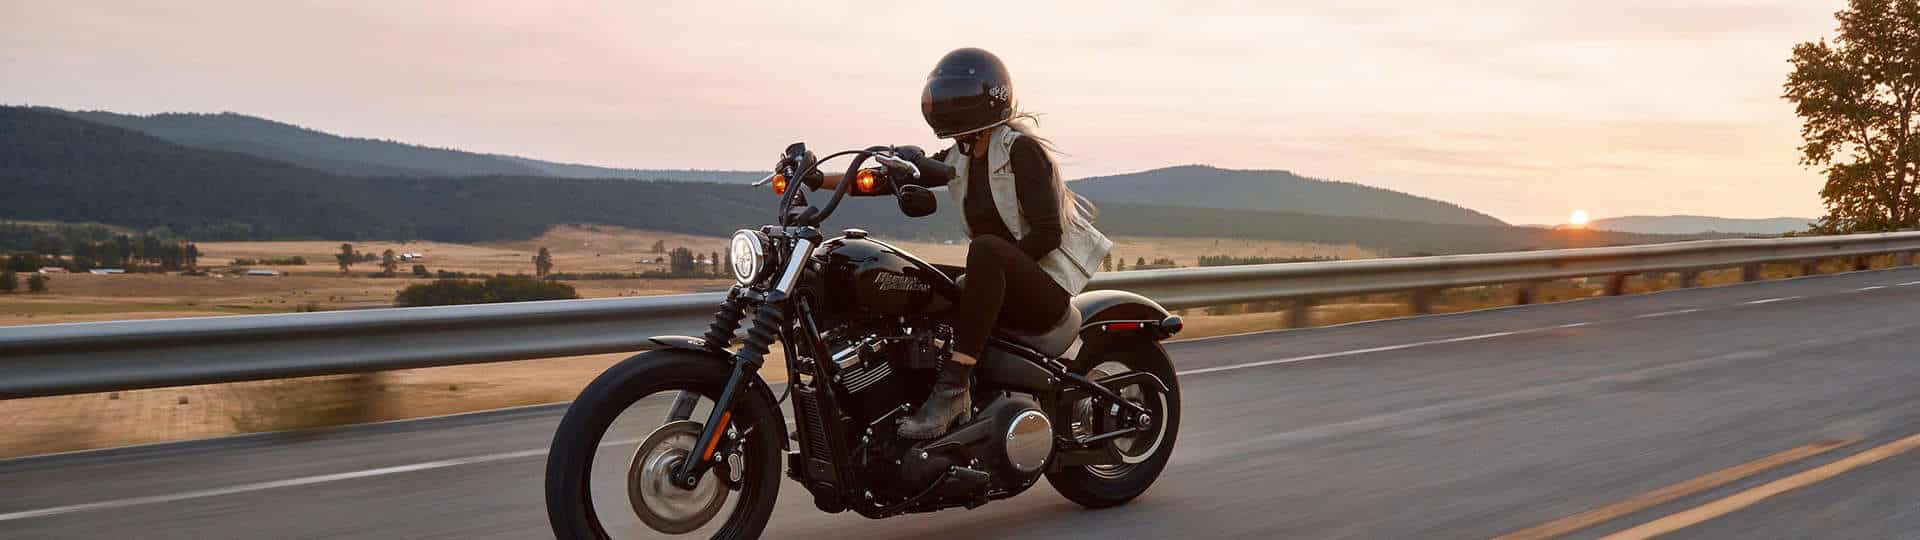 female motorcyclist